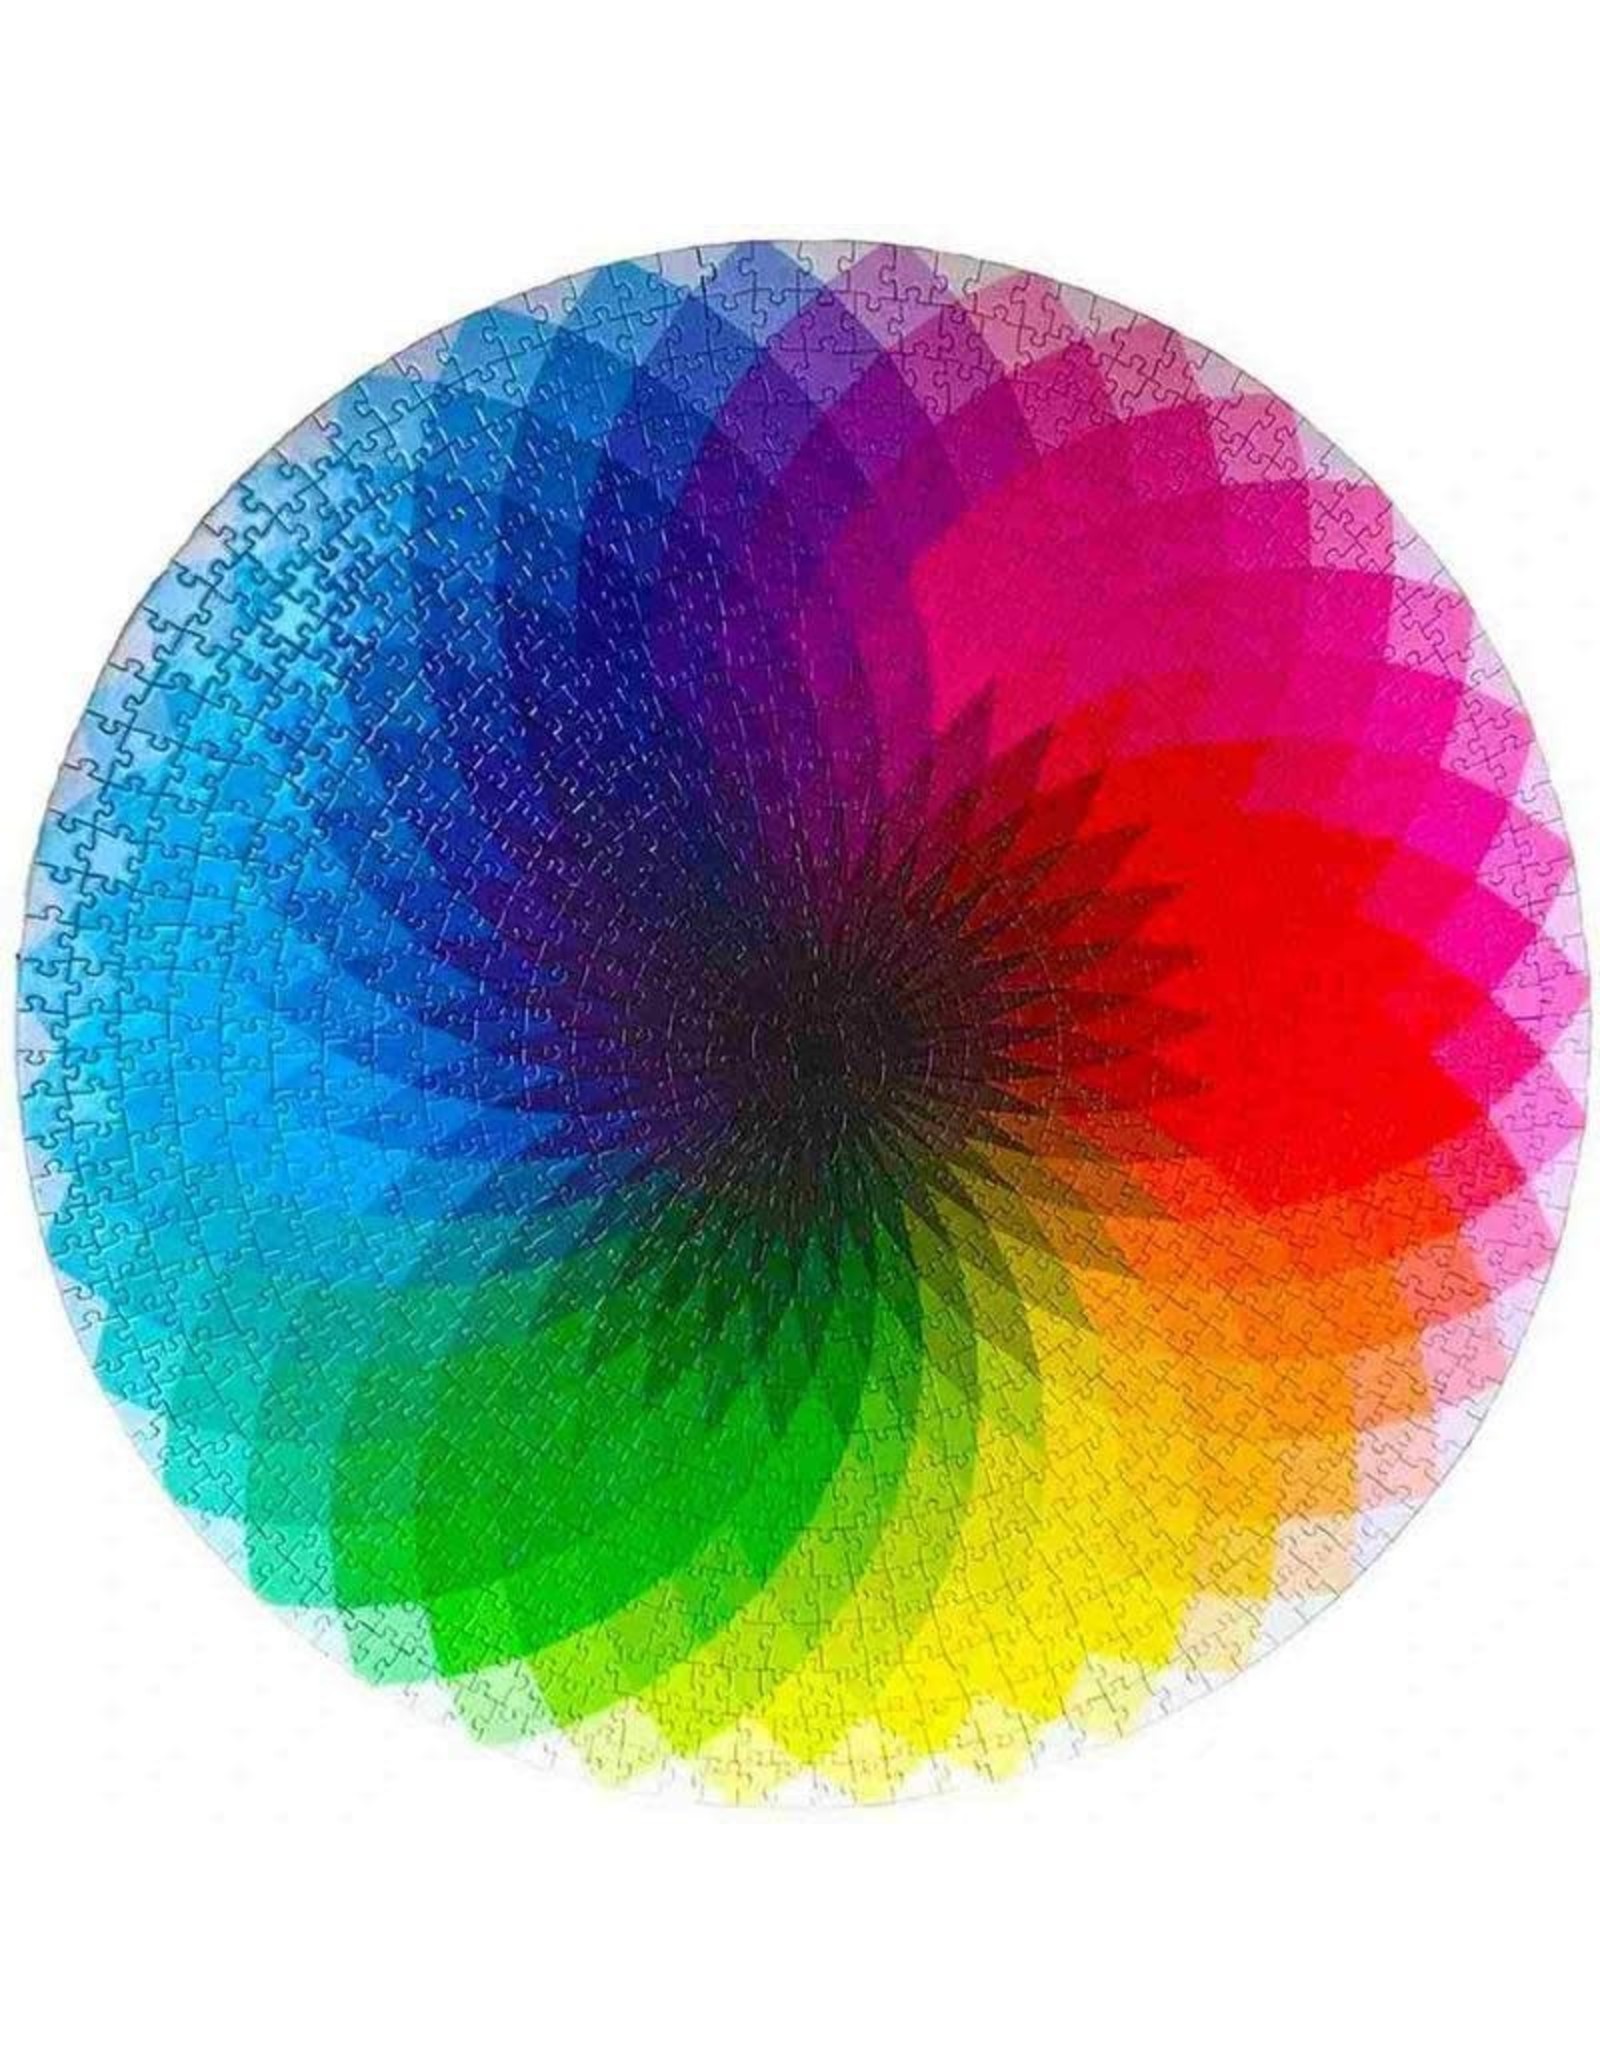 Rainbow Round Puzzle 1000pcs